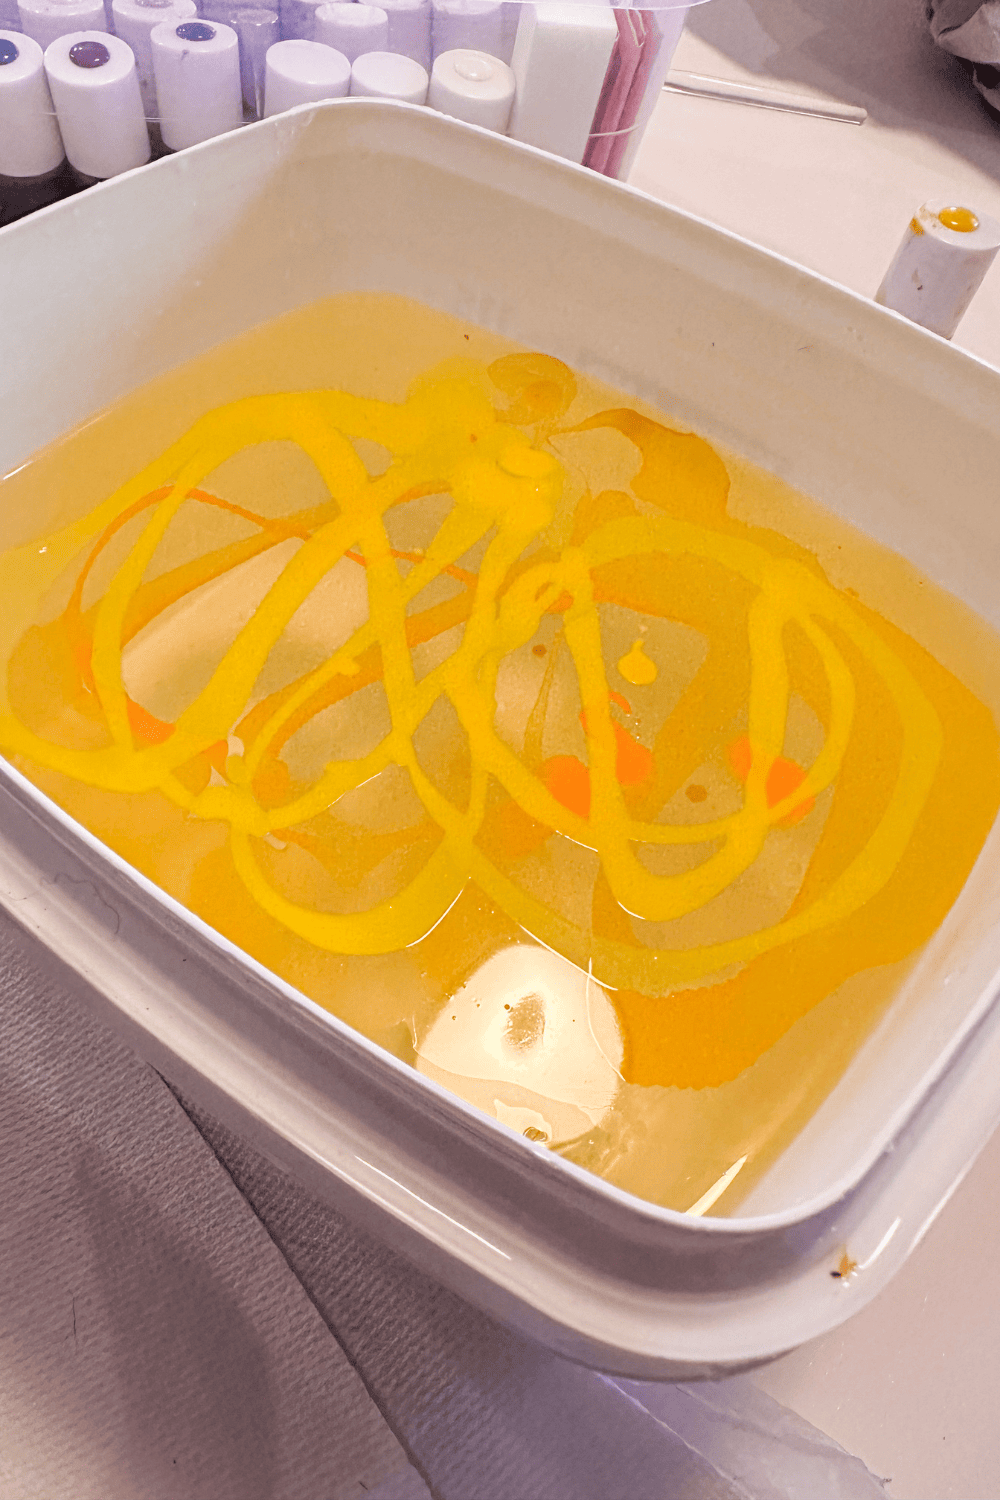 yellow and orange nail polish floating on water